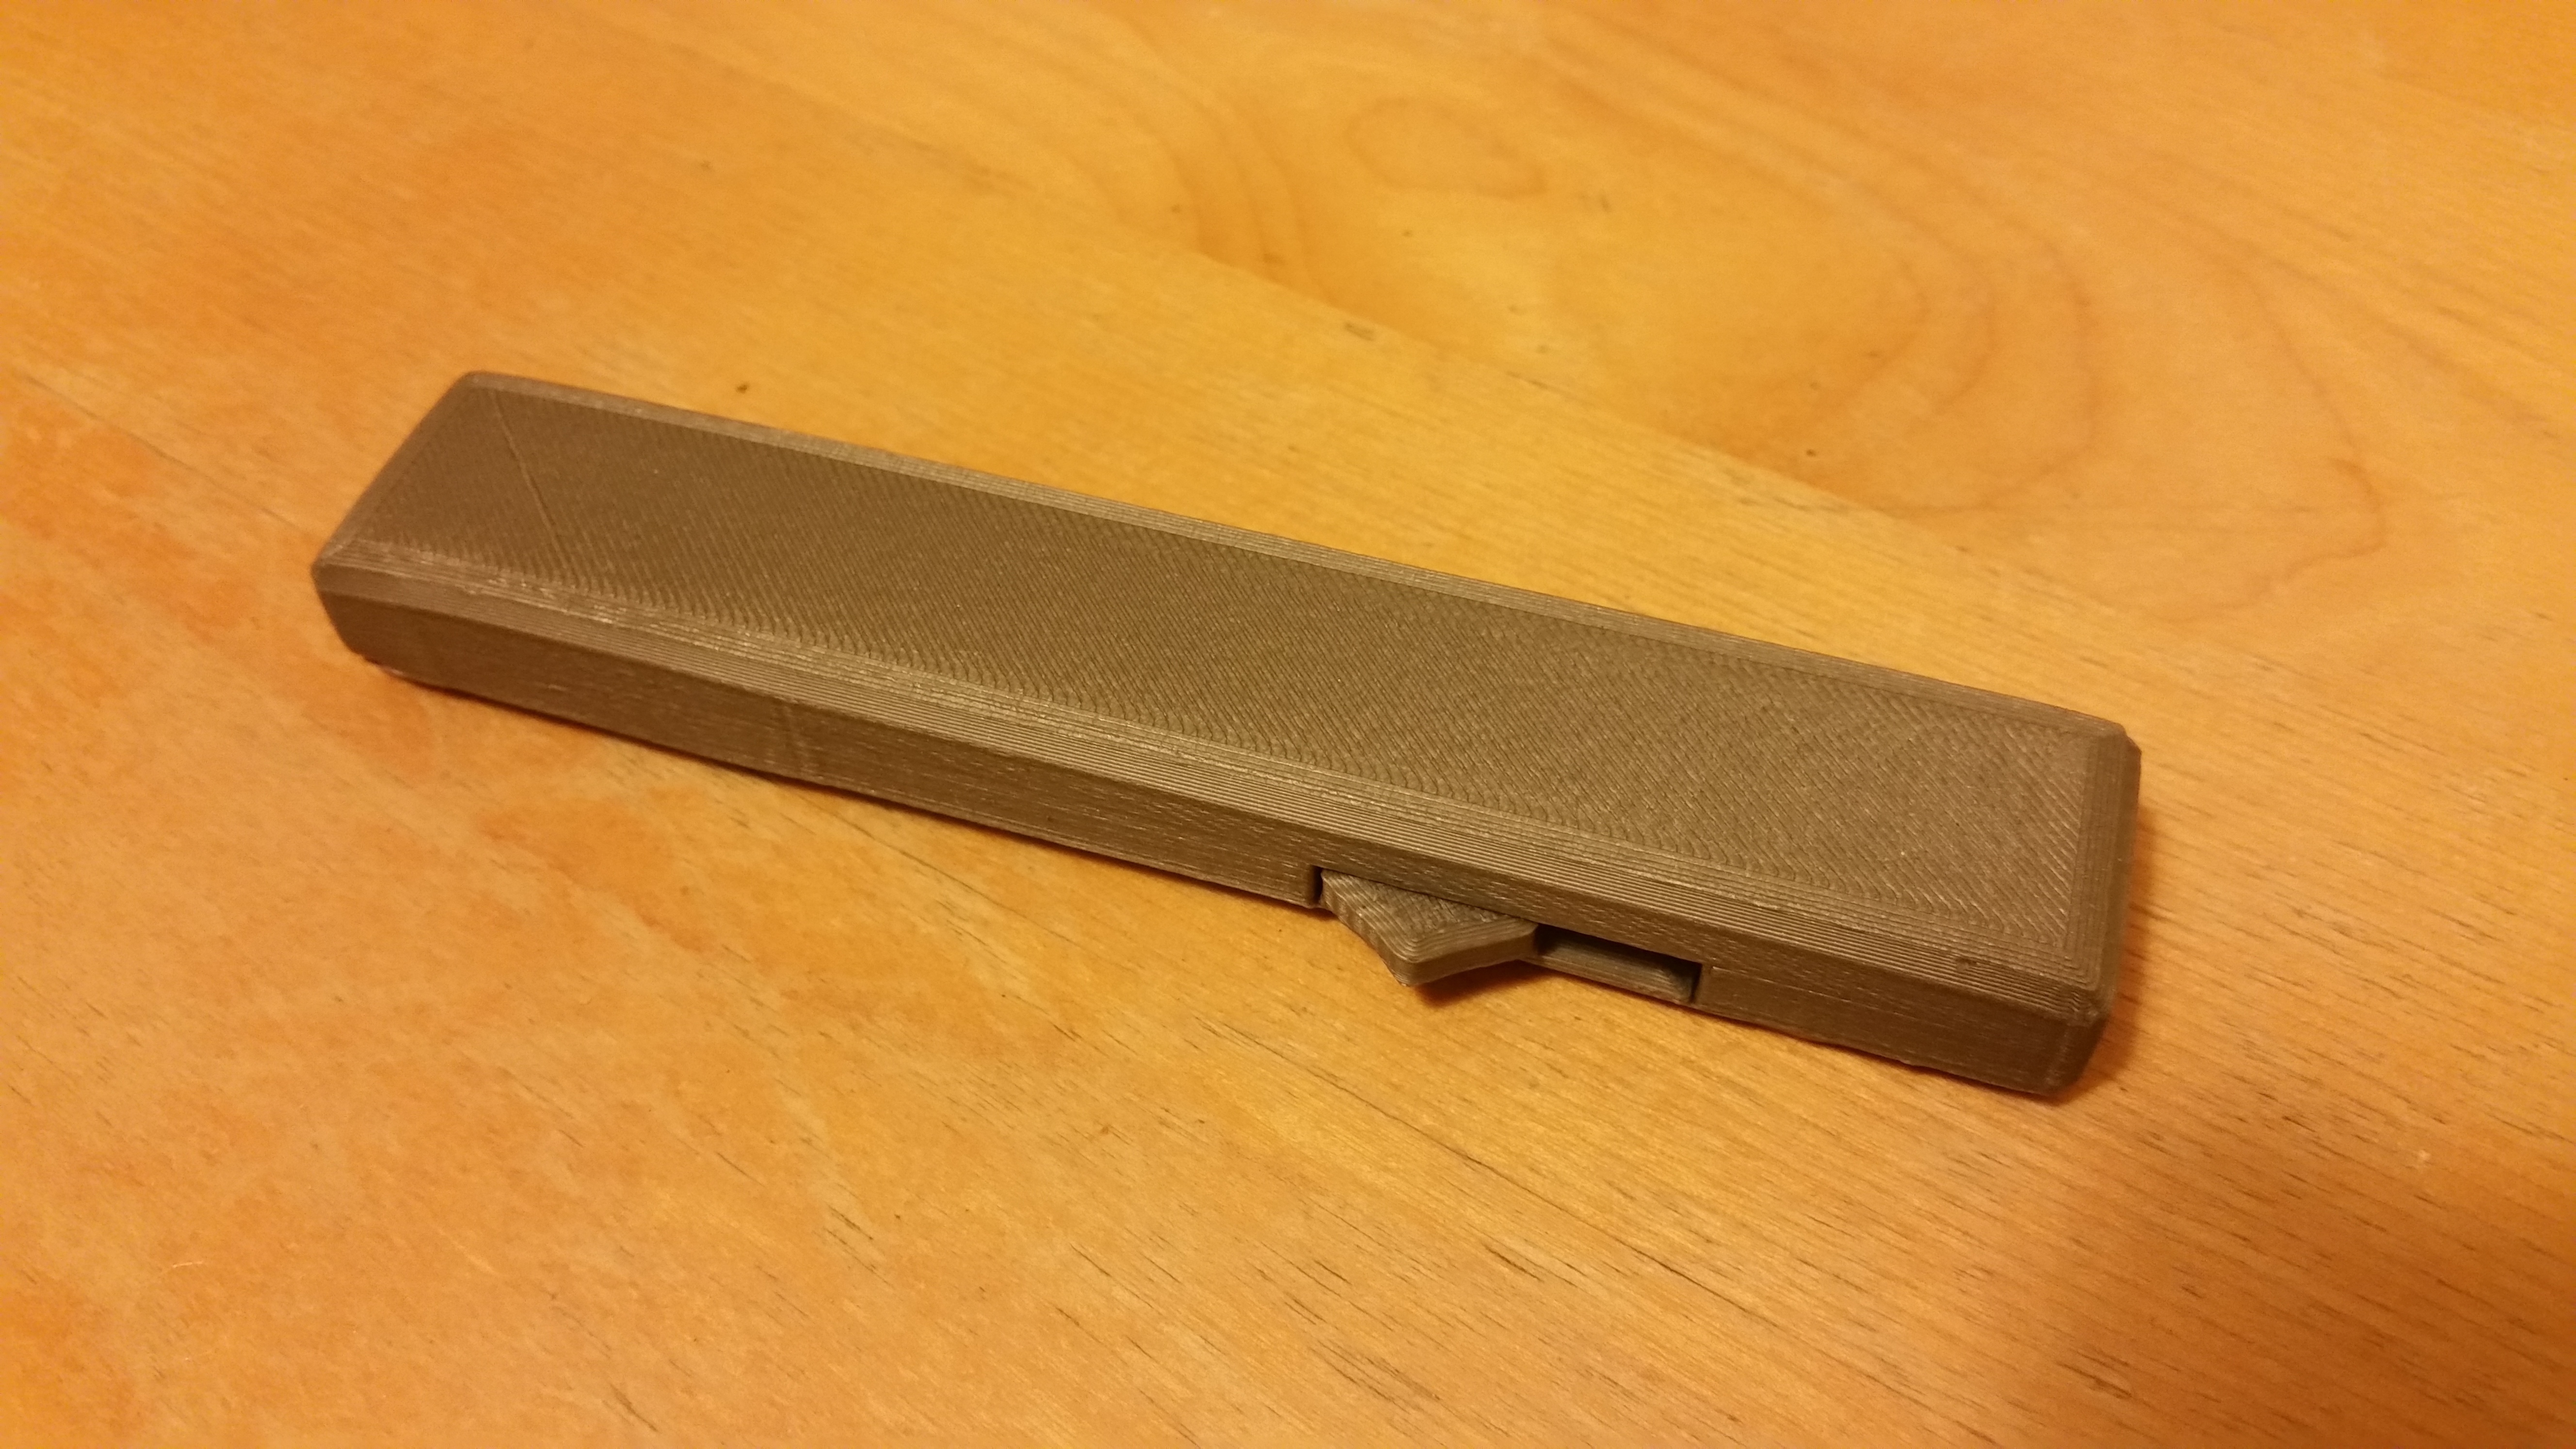 Autoblade (otf / flick) knife 3D Print 101620